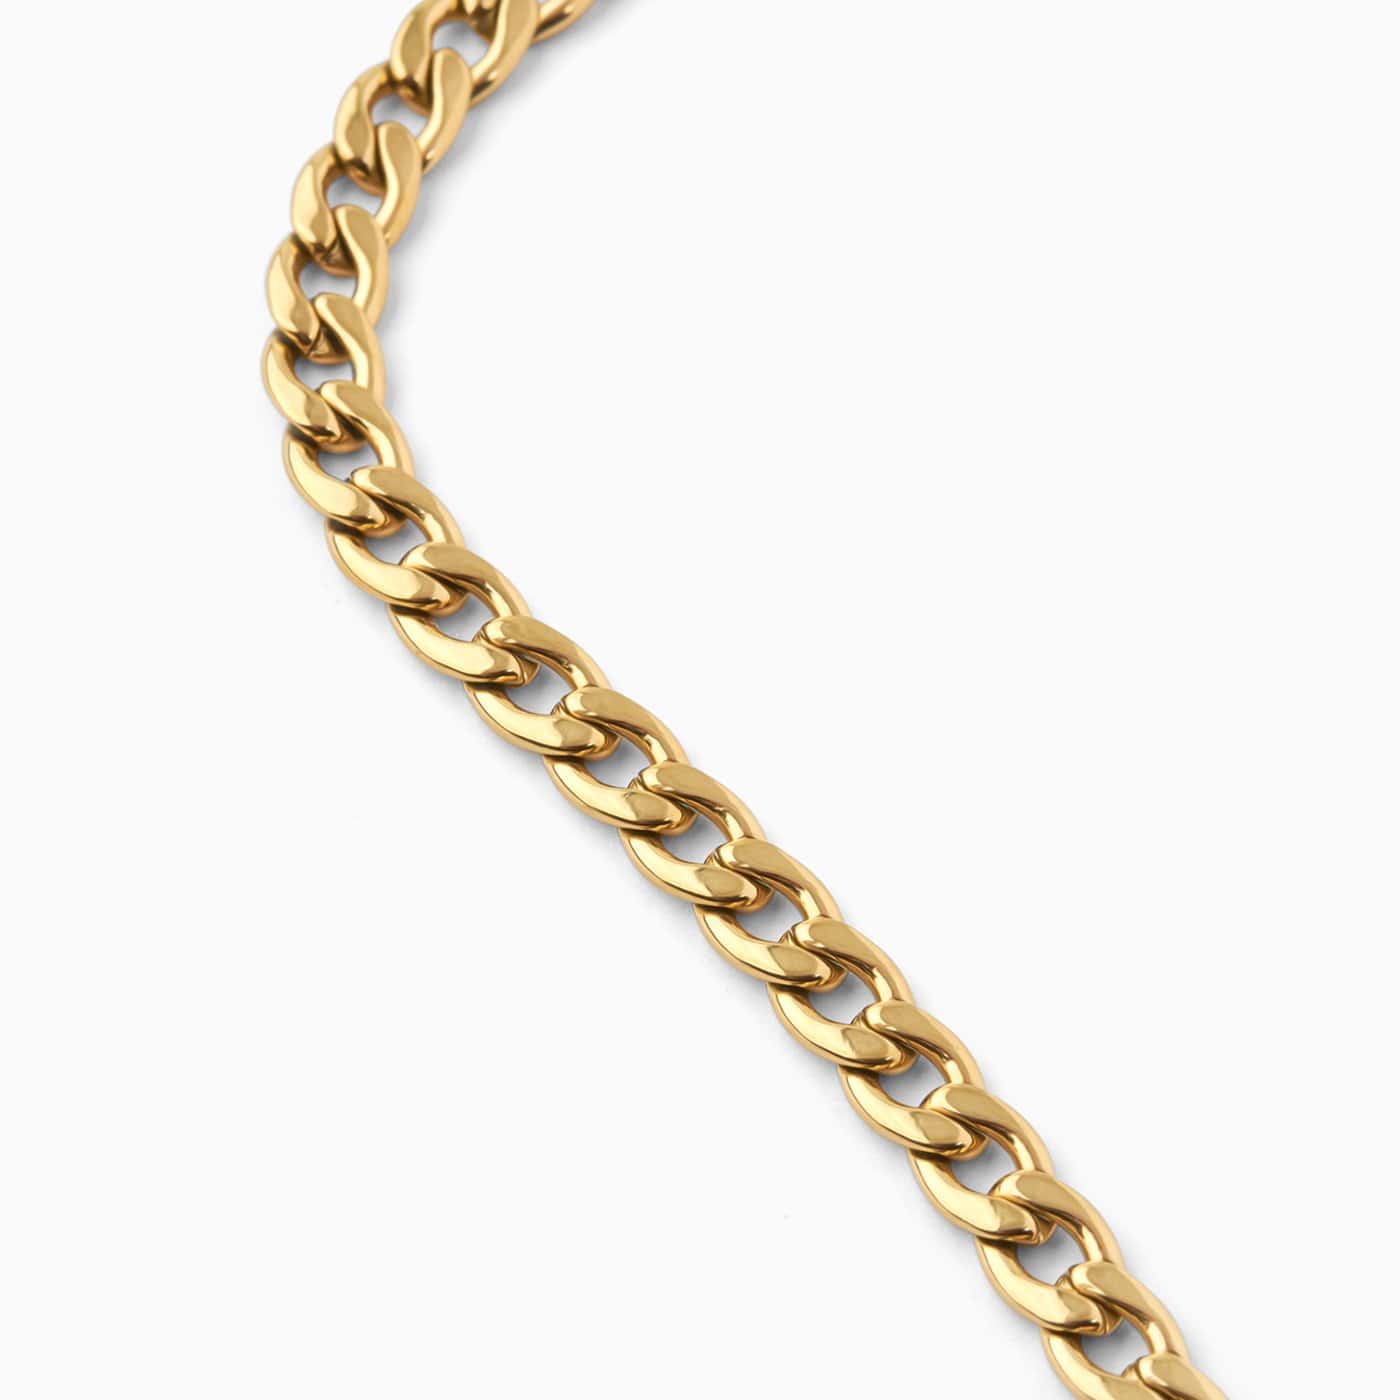 Kette Mini Gold Halskette